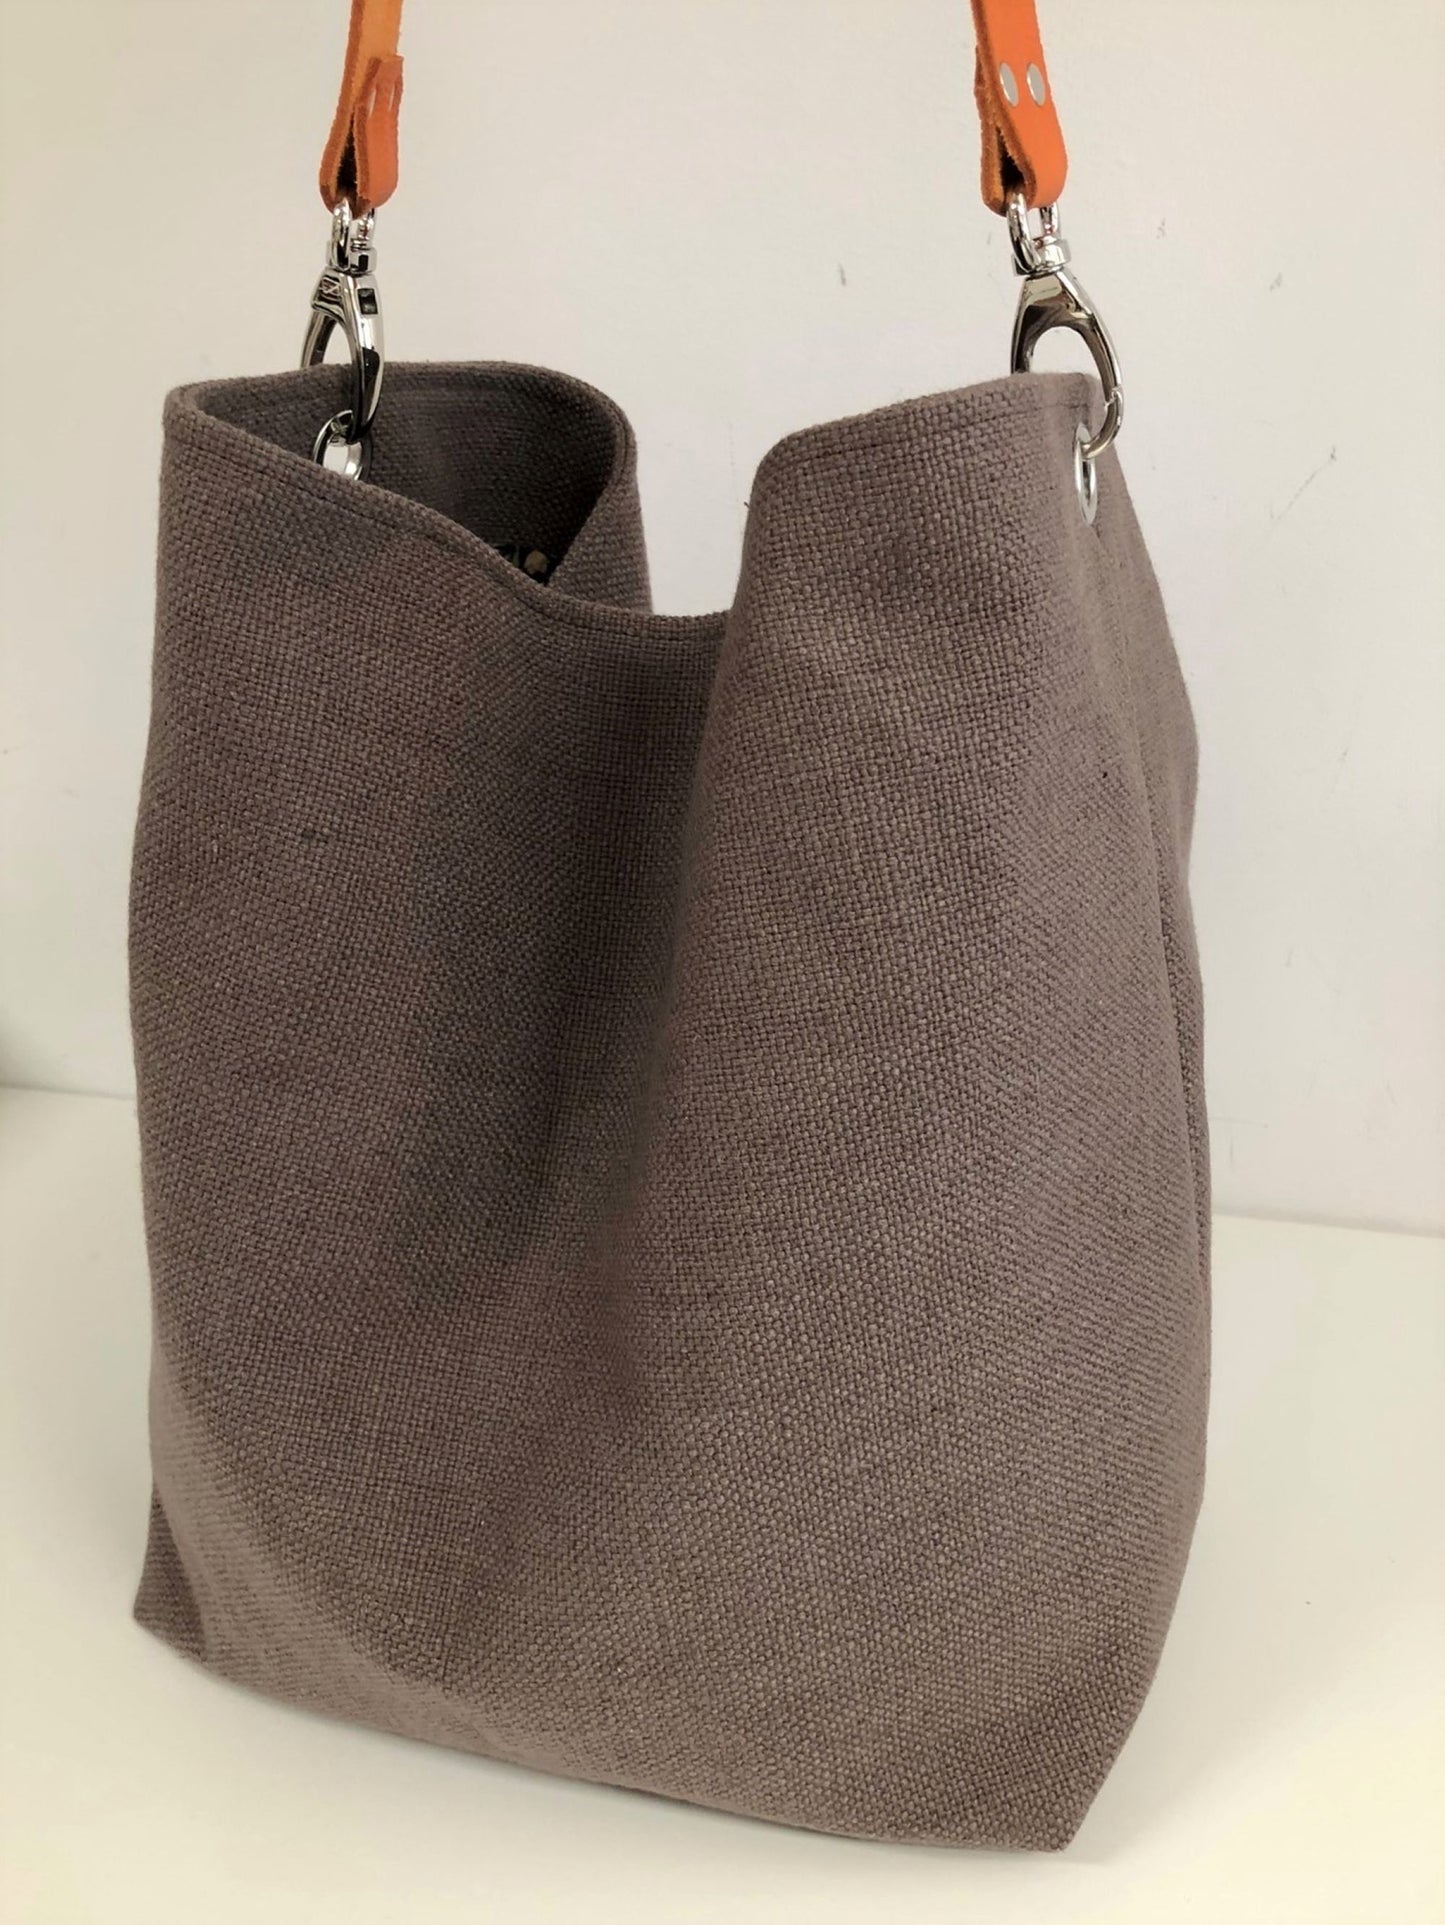 Hobo bag in earth brown linen, orange leather handle